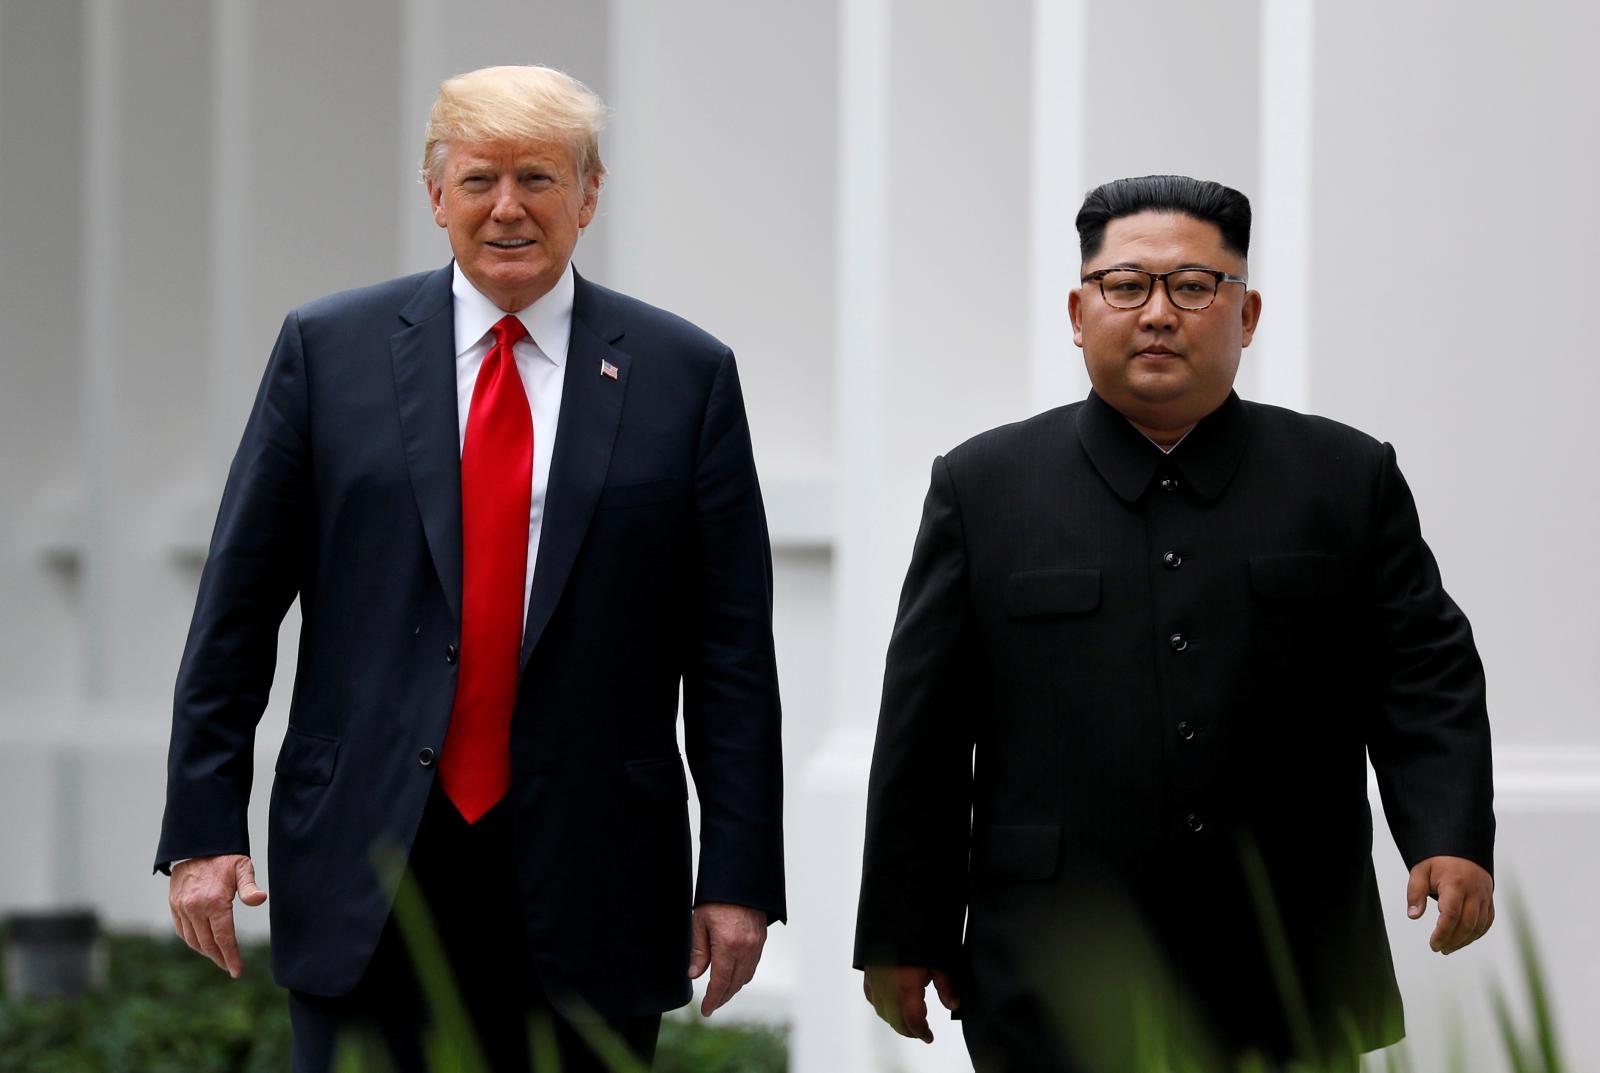 U.S. and North Korean officials met in Hanoi to discuss second Trump-Kim summit: South Korean newspaper